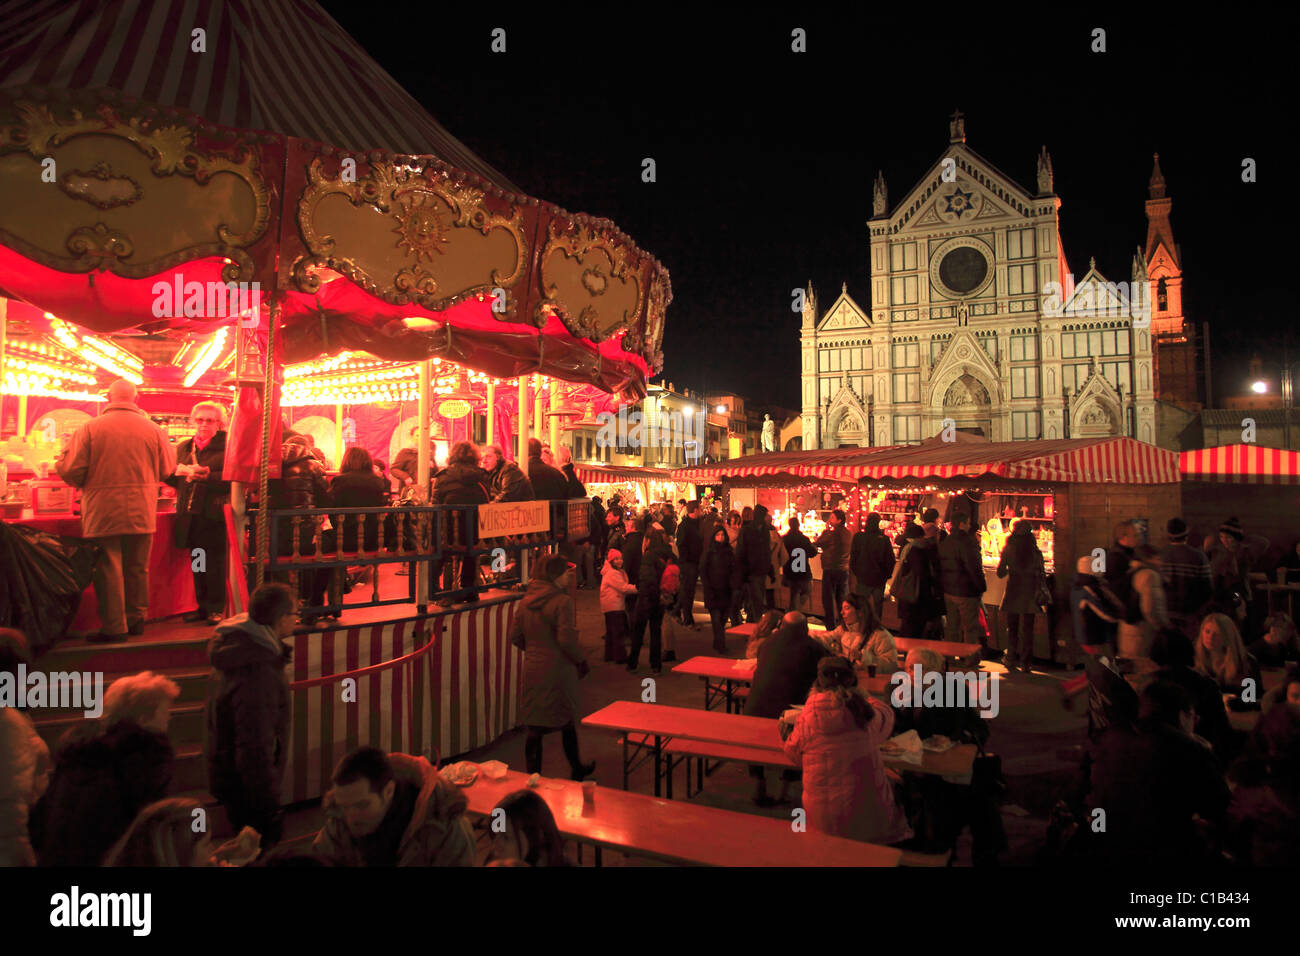 Mercatino di Natale in piazza Santa Croce, Firenze,Toscana, Italia, Europa  Foto stock - Alamy